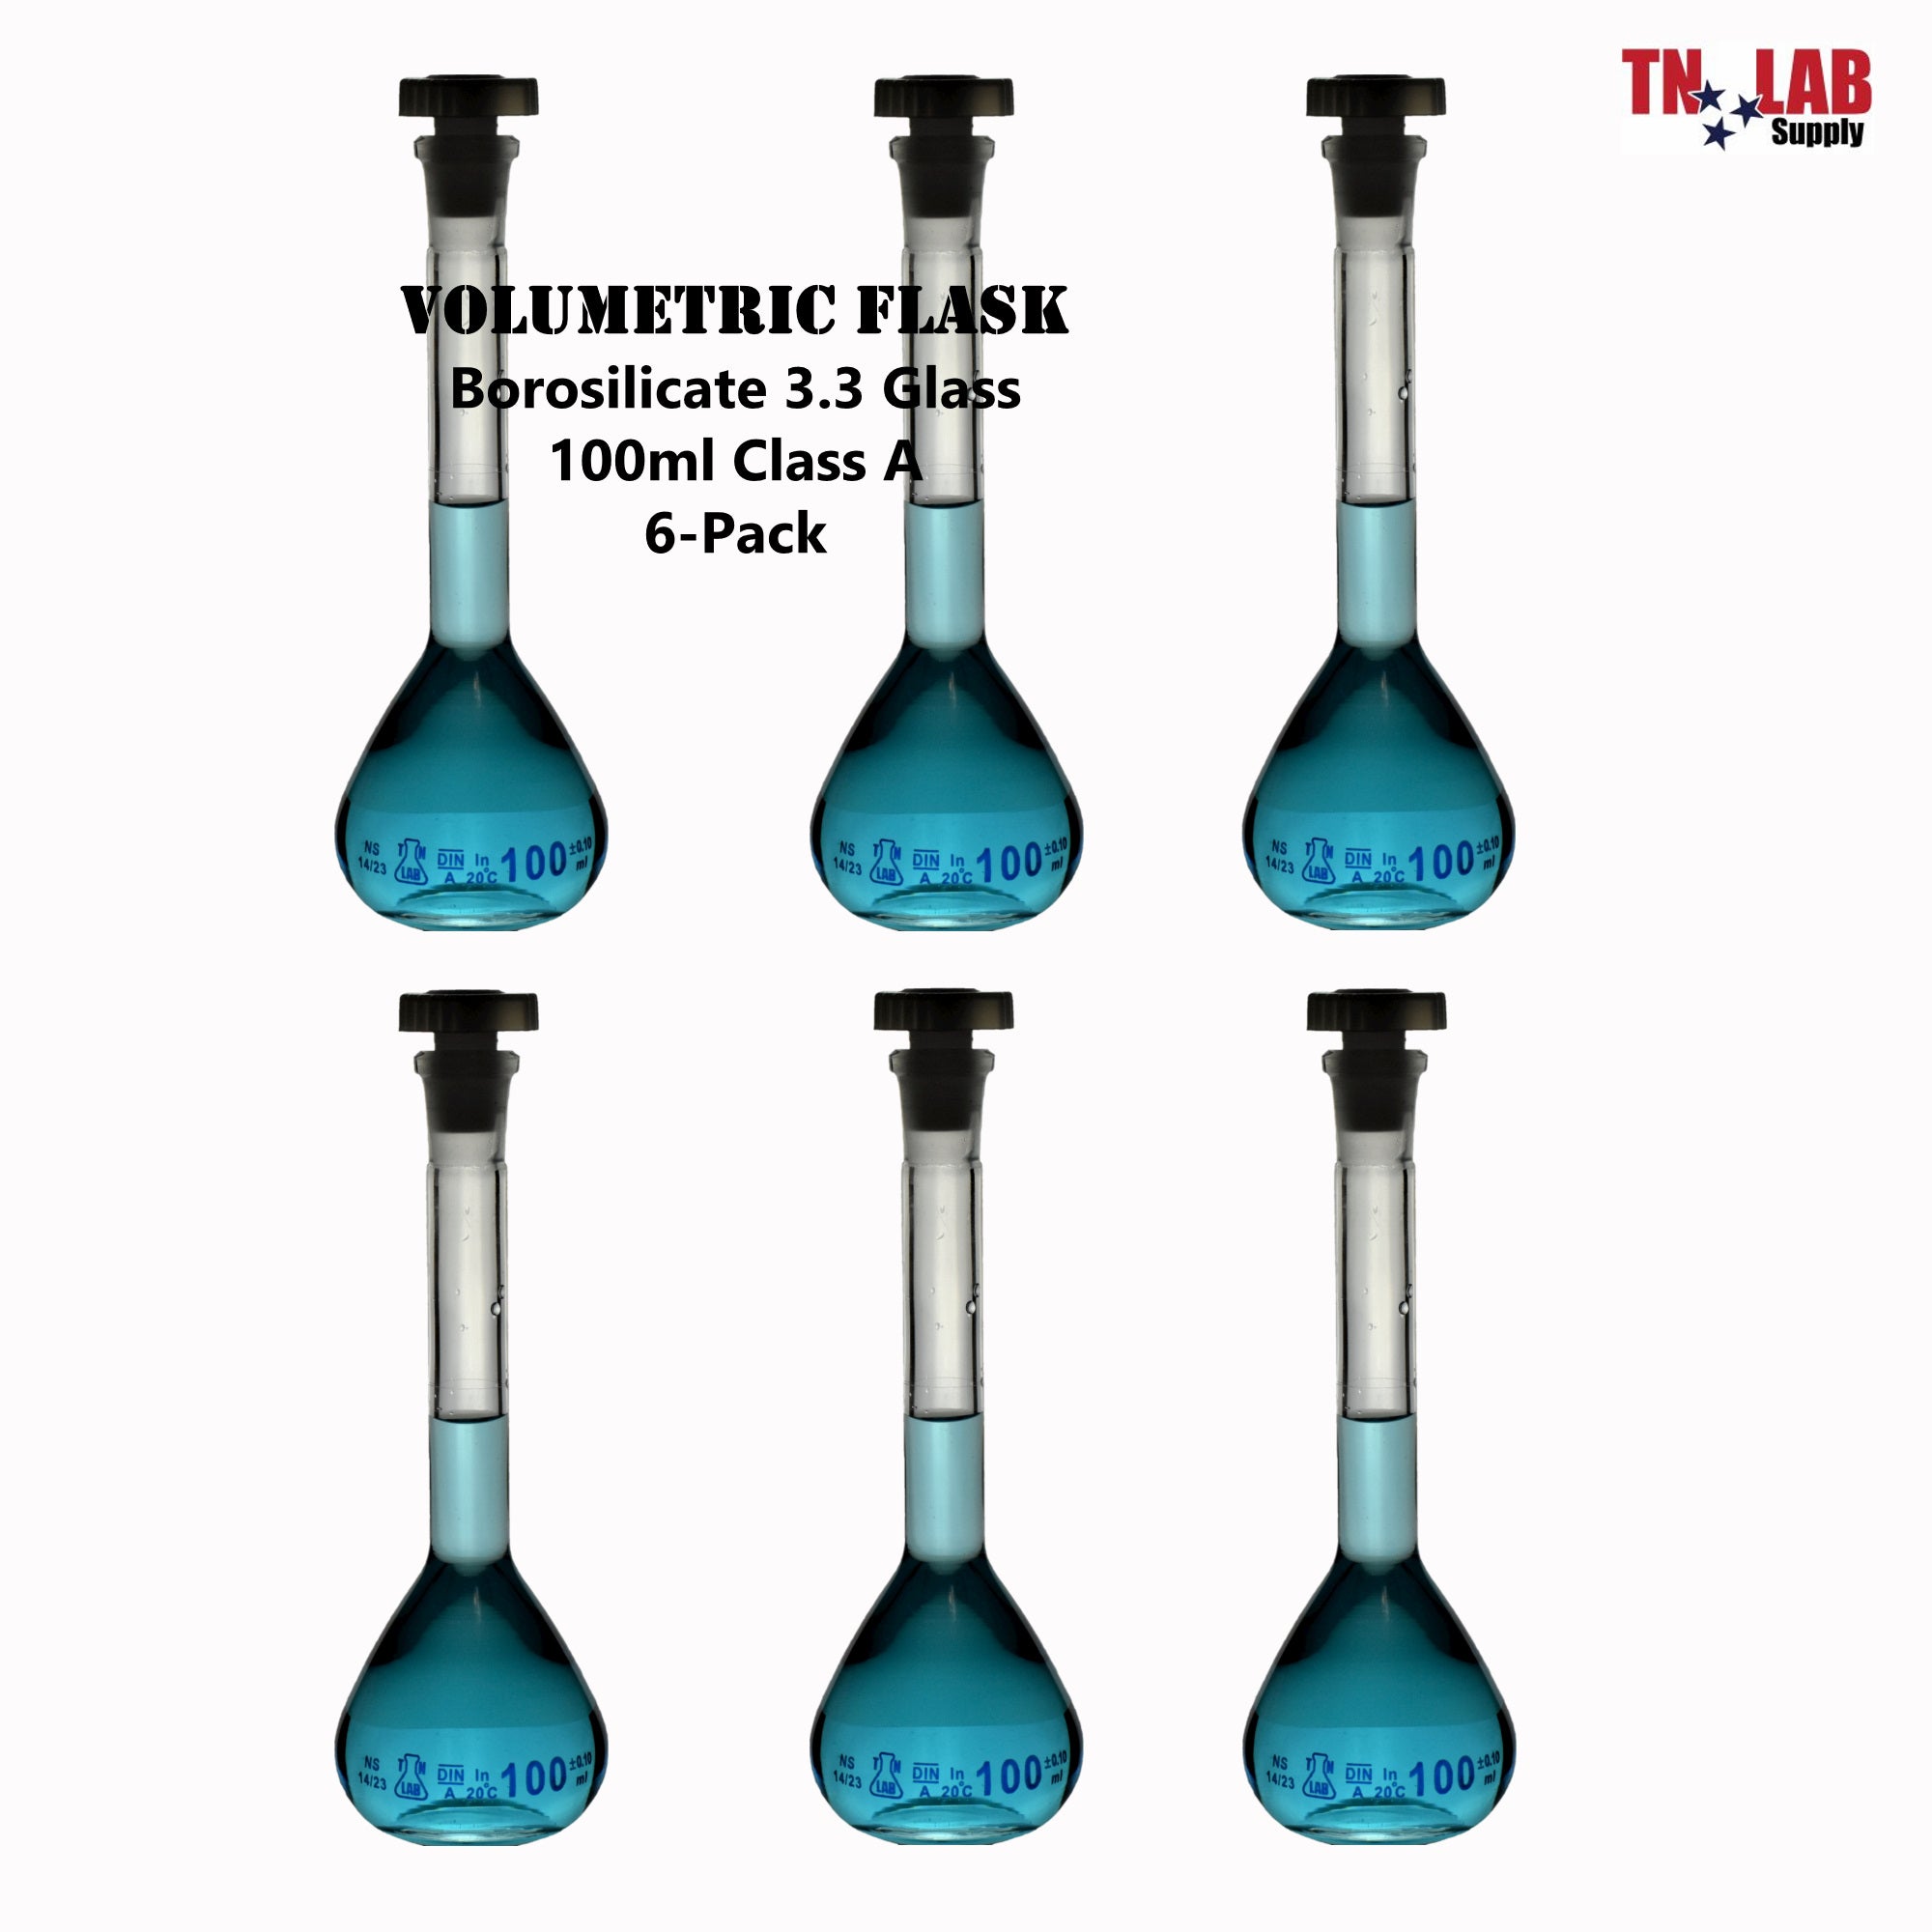 Volumetric Flask 100ml Borosilicate Glass 14/23 Joint Class A Accuracy